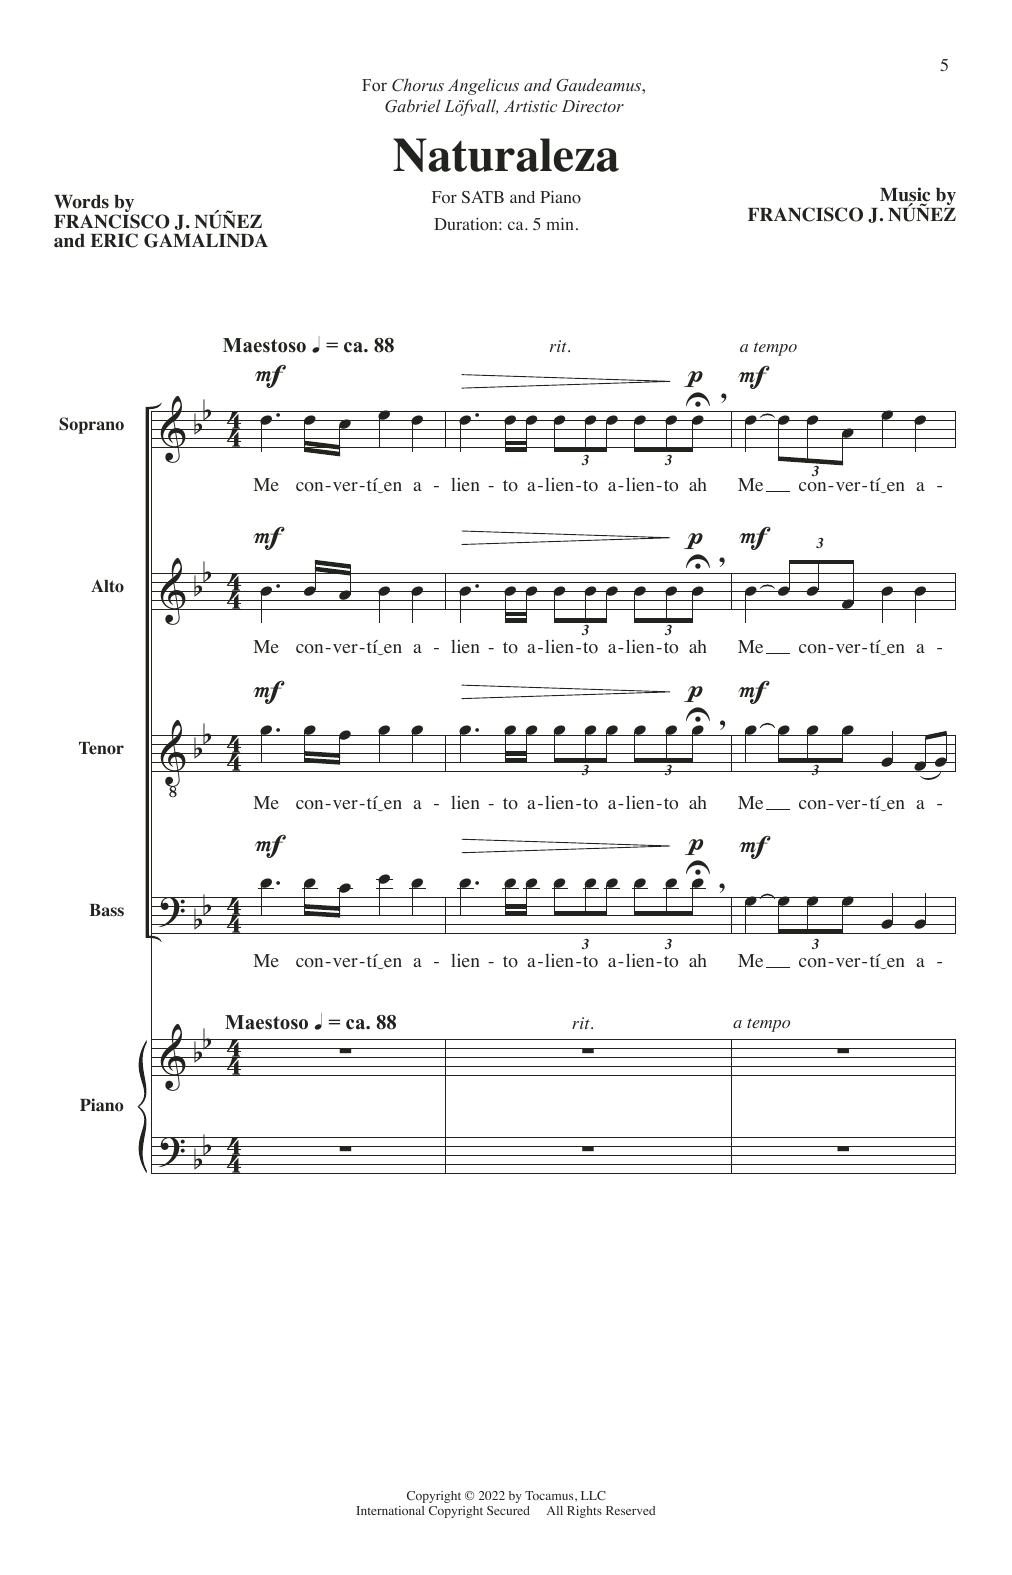 Francisco J. Núñez Naturaleza Sheet Music Notes & Chords for SATB Choir - Download or Print PDF